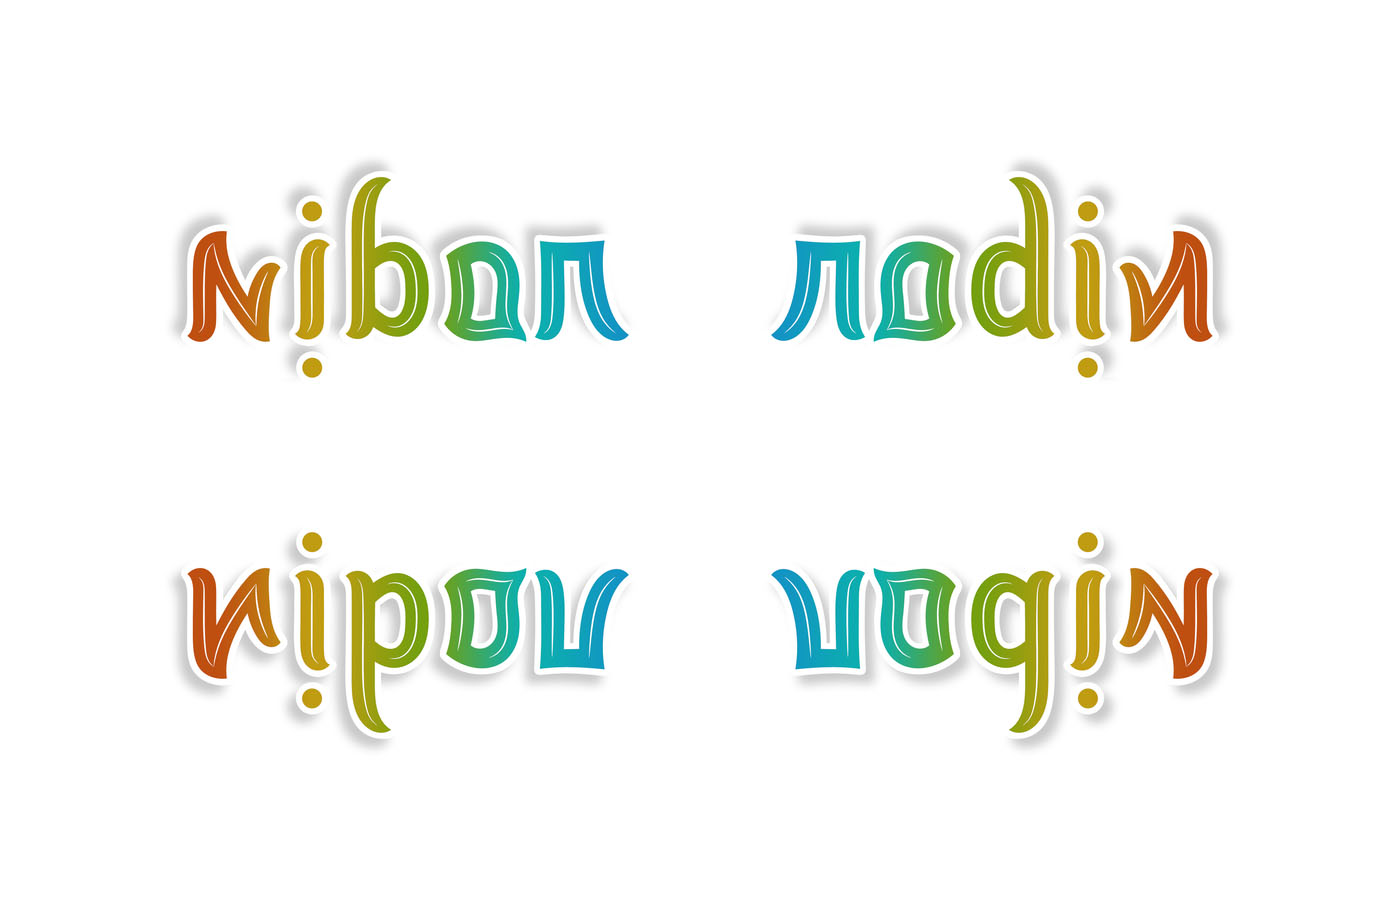 ambigramme Nibar Radin Ripou Vagin